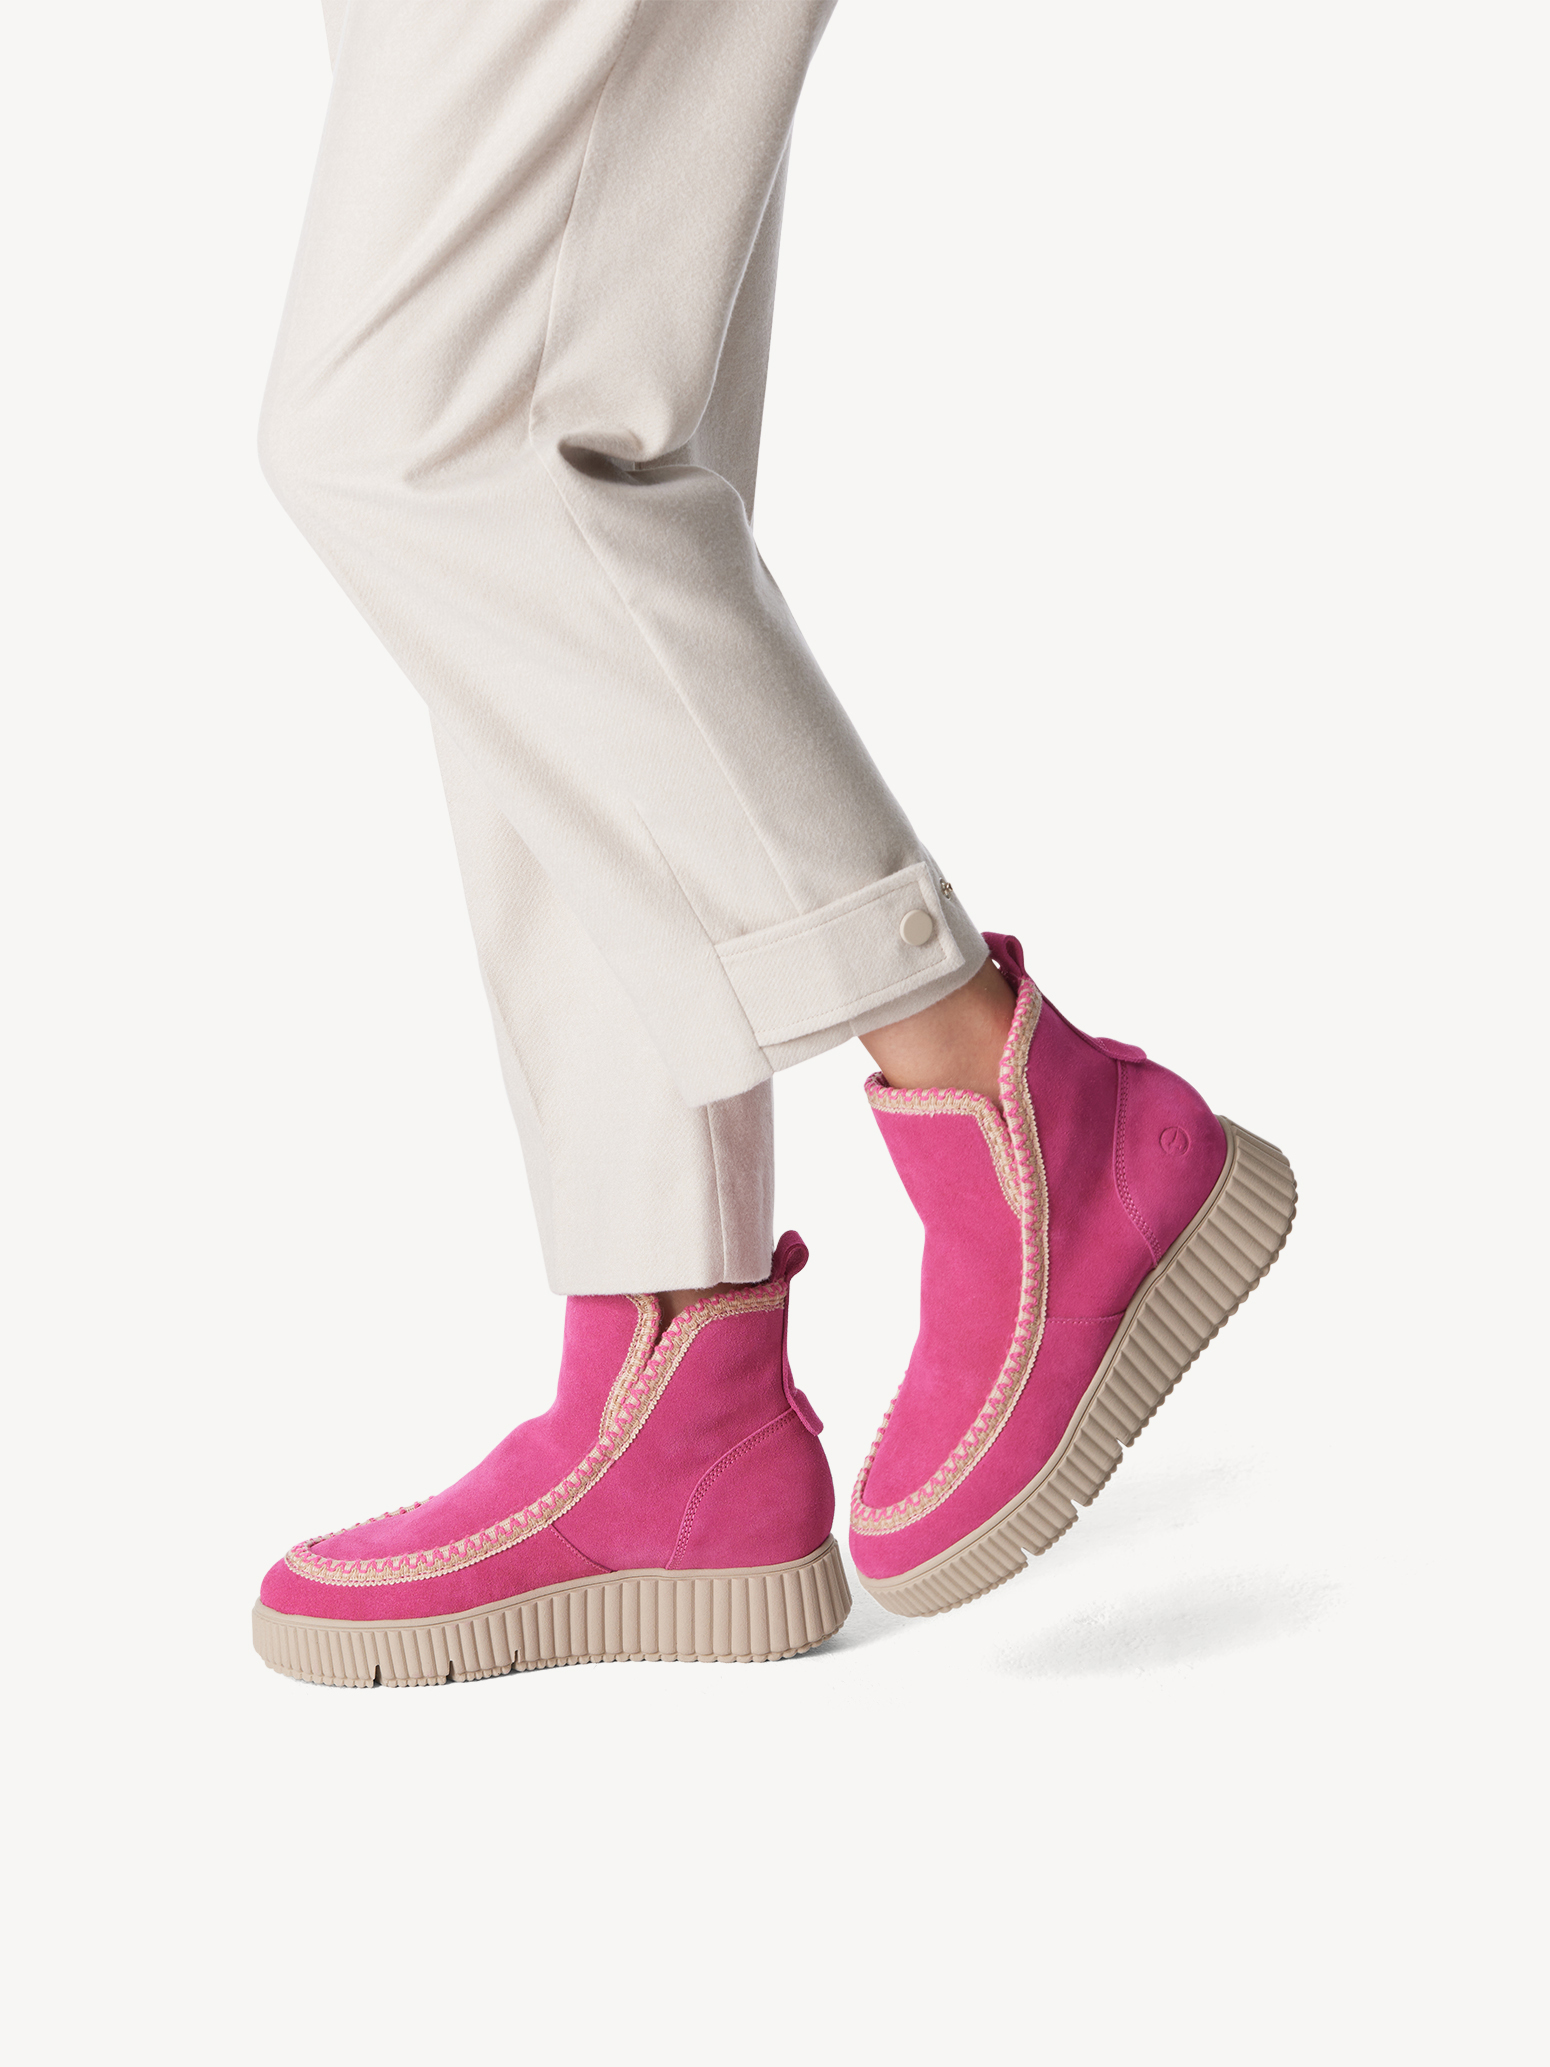 Lederstiefelette - online pink Tamaris Stiefeletten Boots kaufen! 1-26865-41-513: Warmfutter 